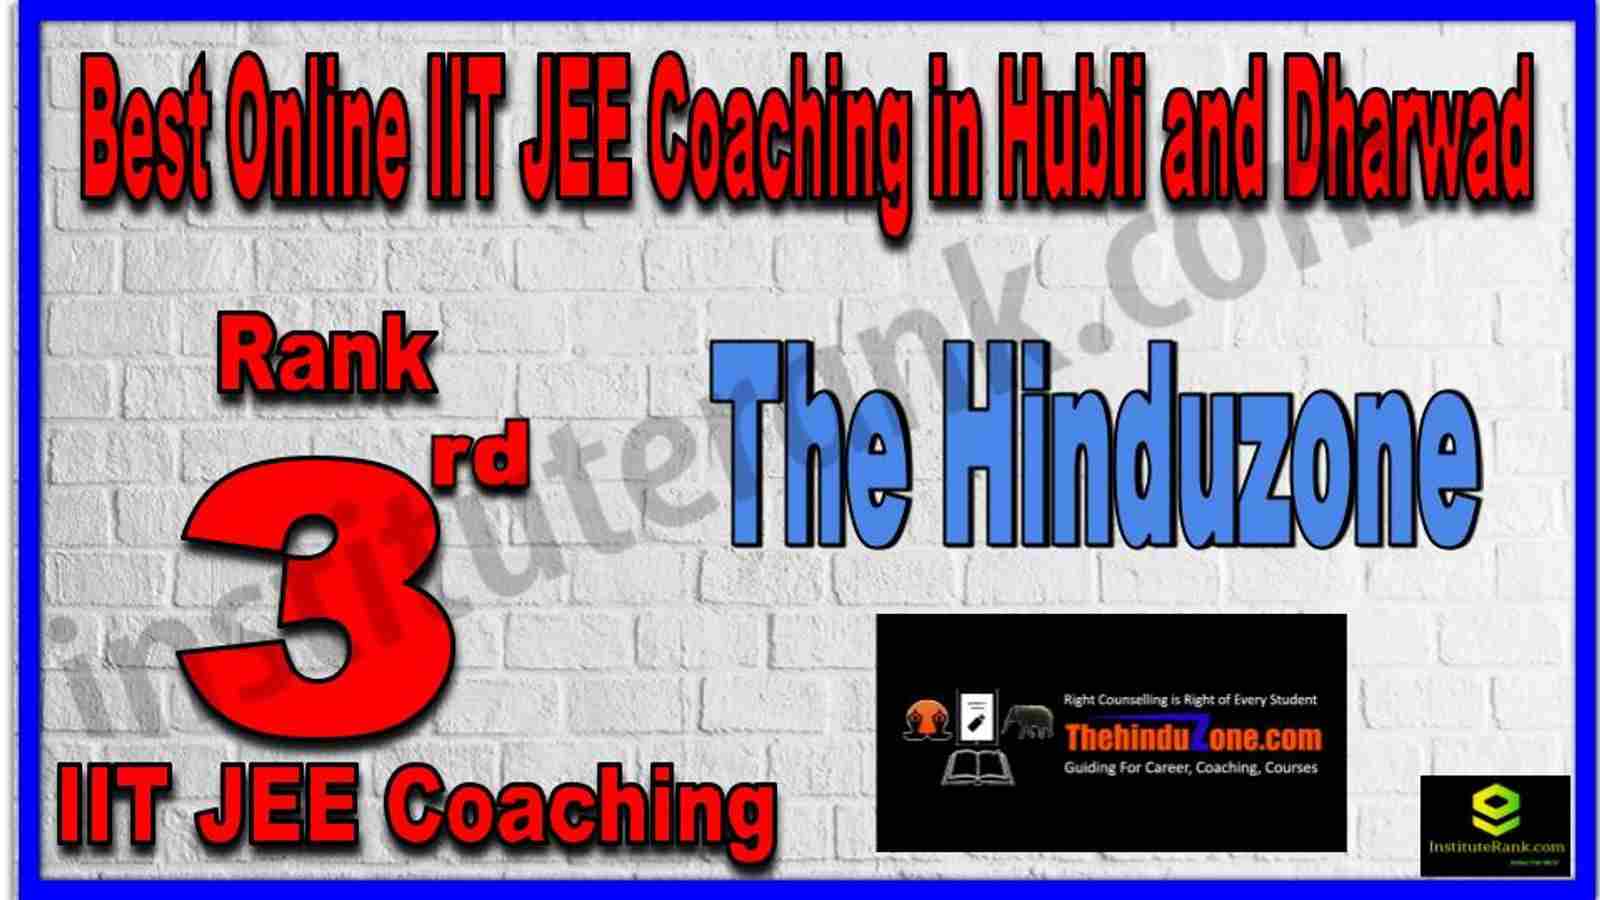 Rank 3rd Best Online IIT JEE Coaching in Hubli and Dharwad